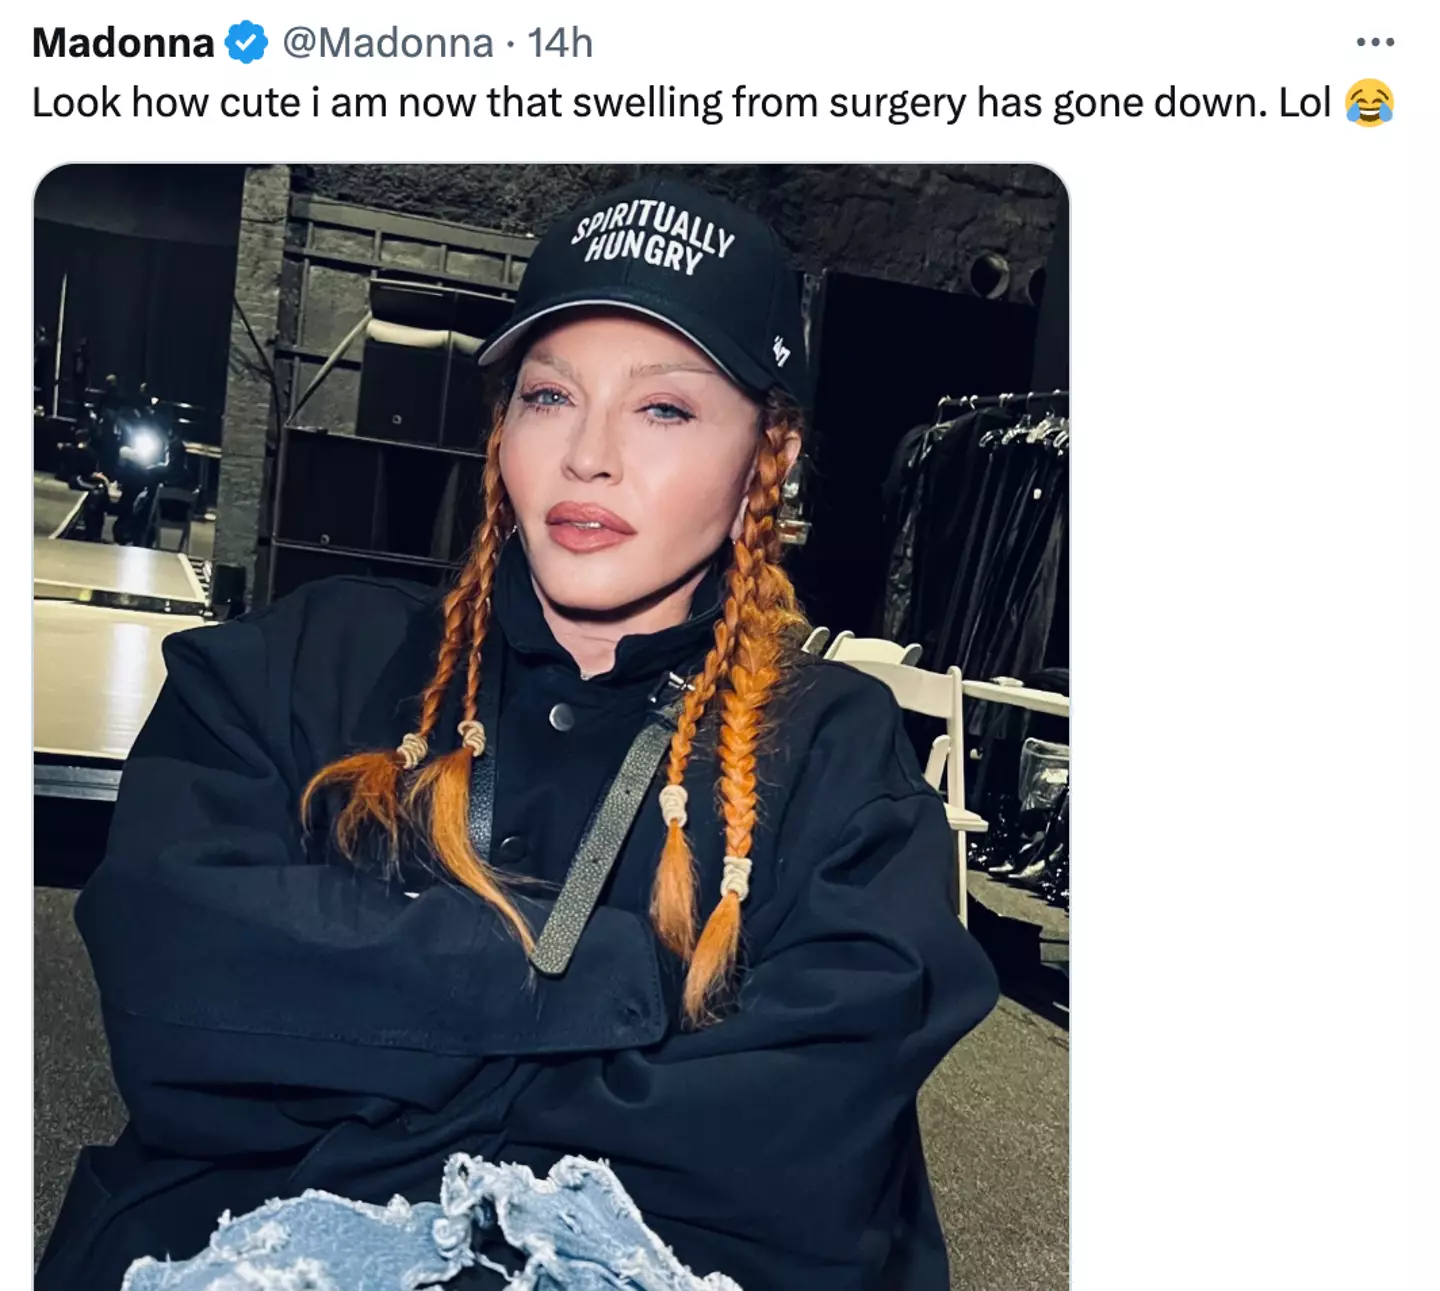 Madonna said she'd had surgery.